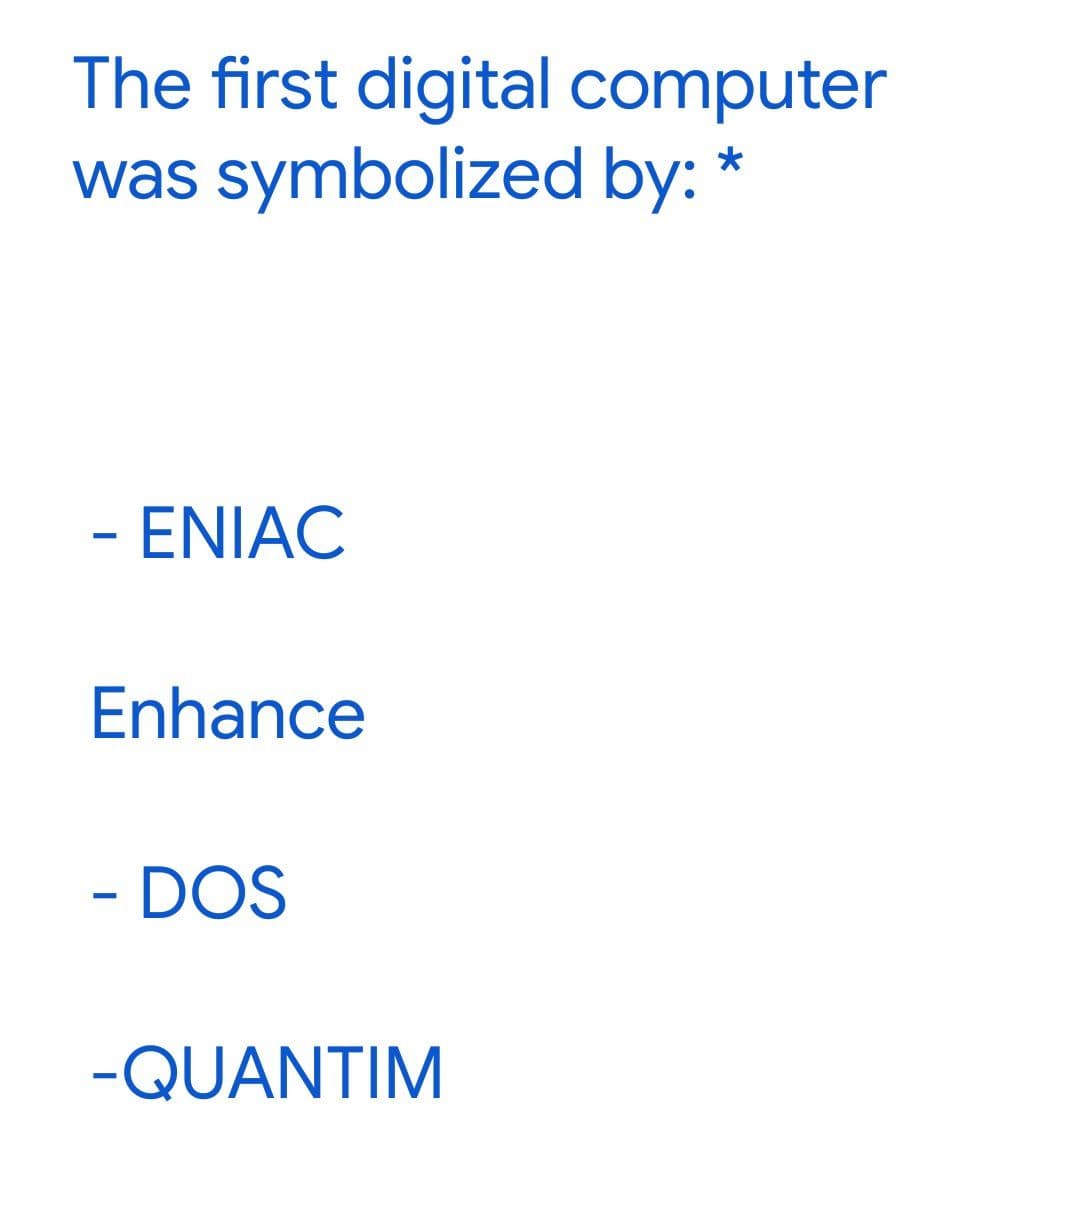 The first digital computer
was symbolized by: *
- ENIAC
Enhance
- DOS
-QUANTIM